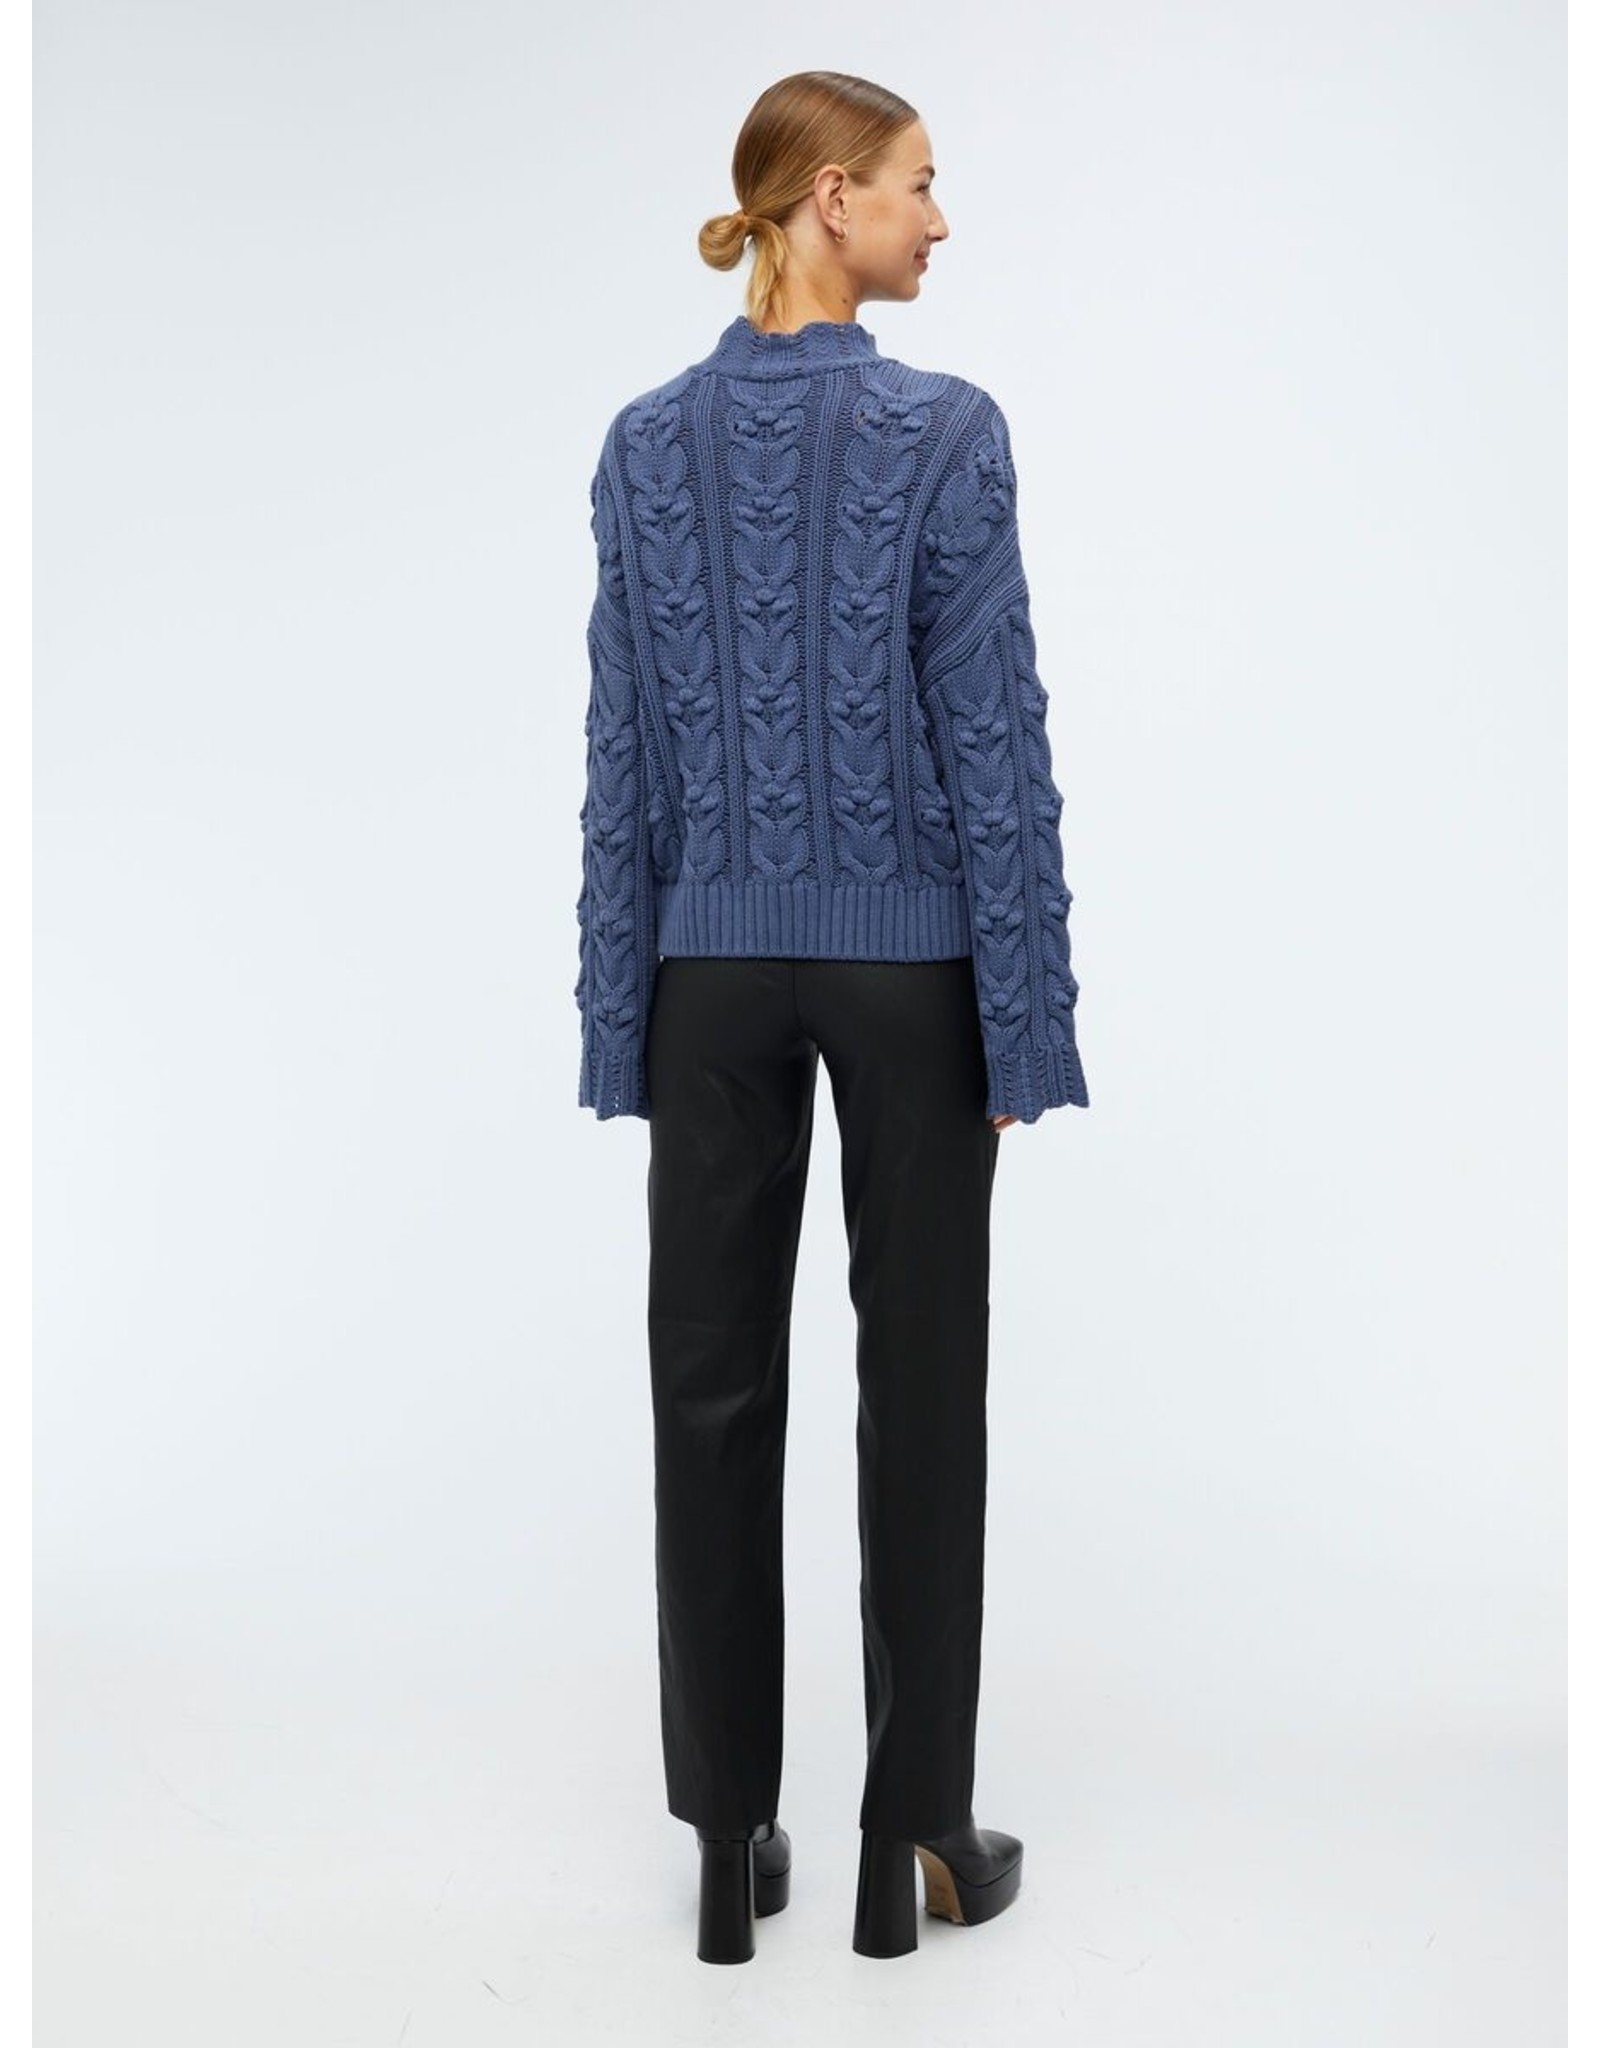 Object Jemmy Knit pullover Blauw